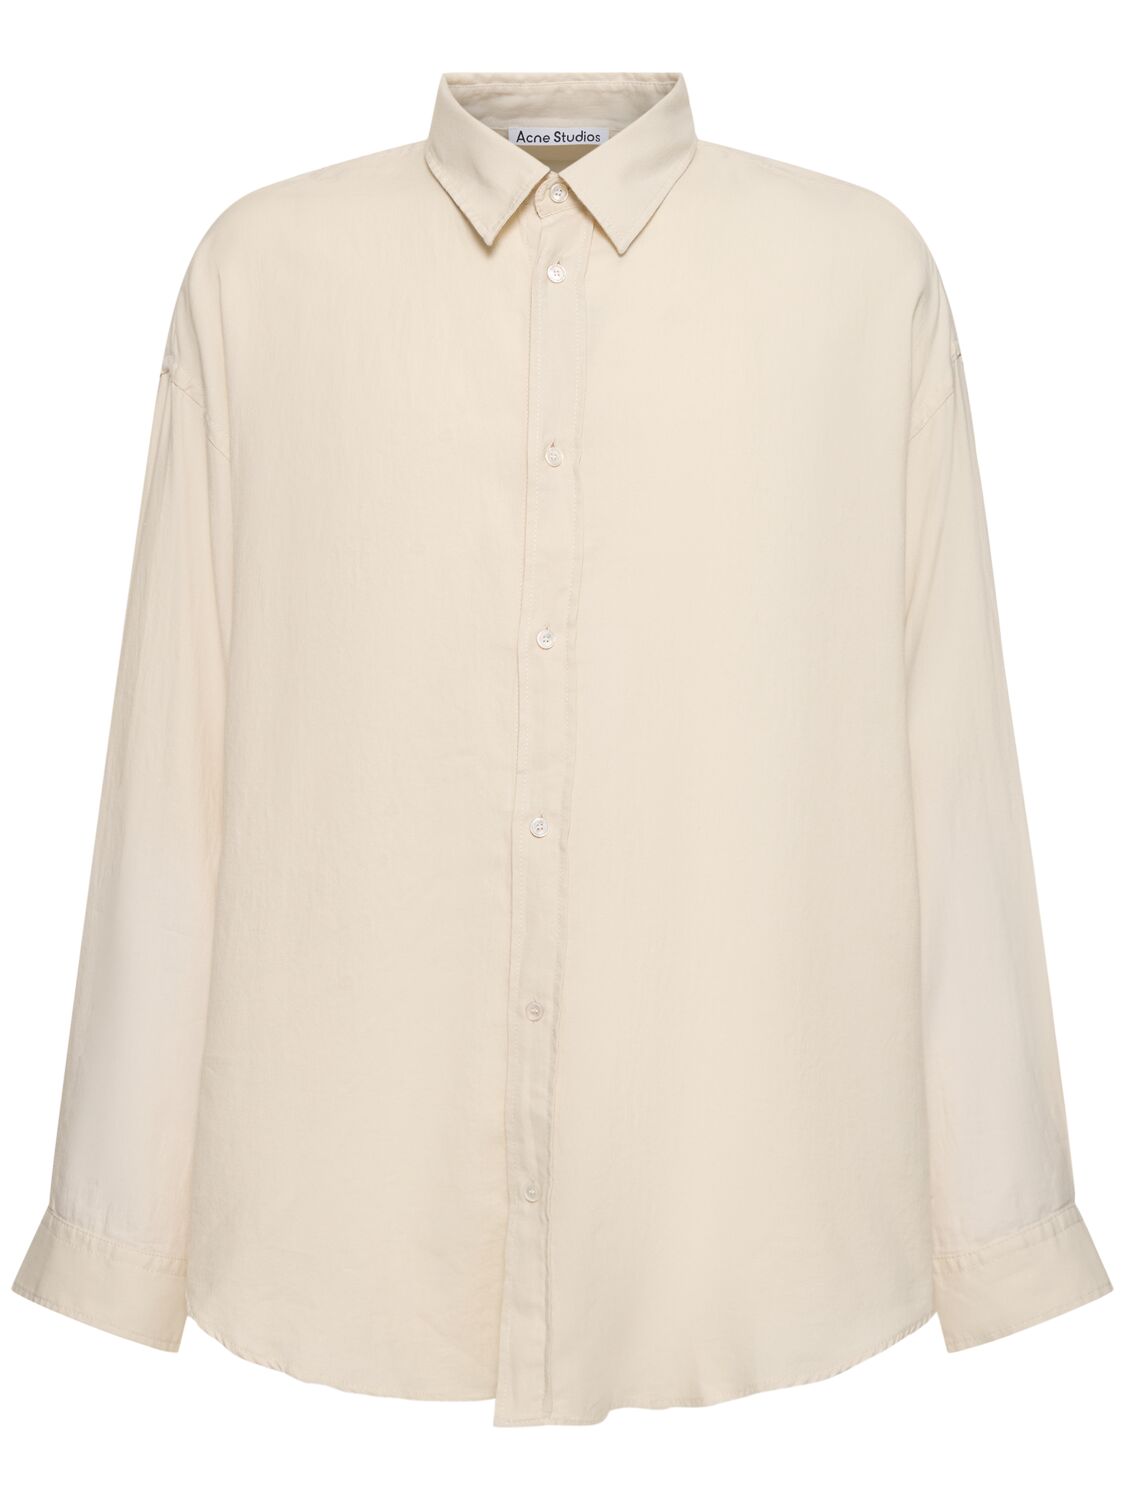 Acne Studios Setar Basket Weave Organic Cotton Shirt In Off White